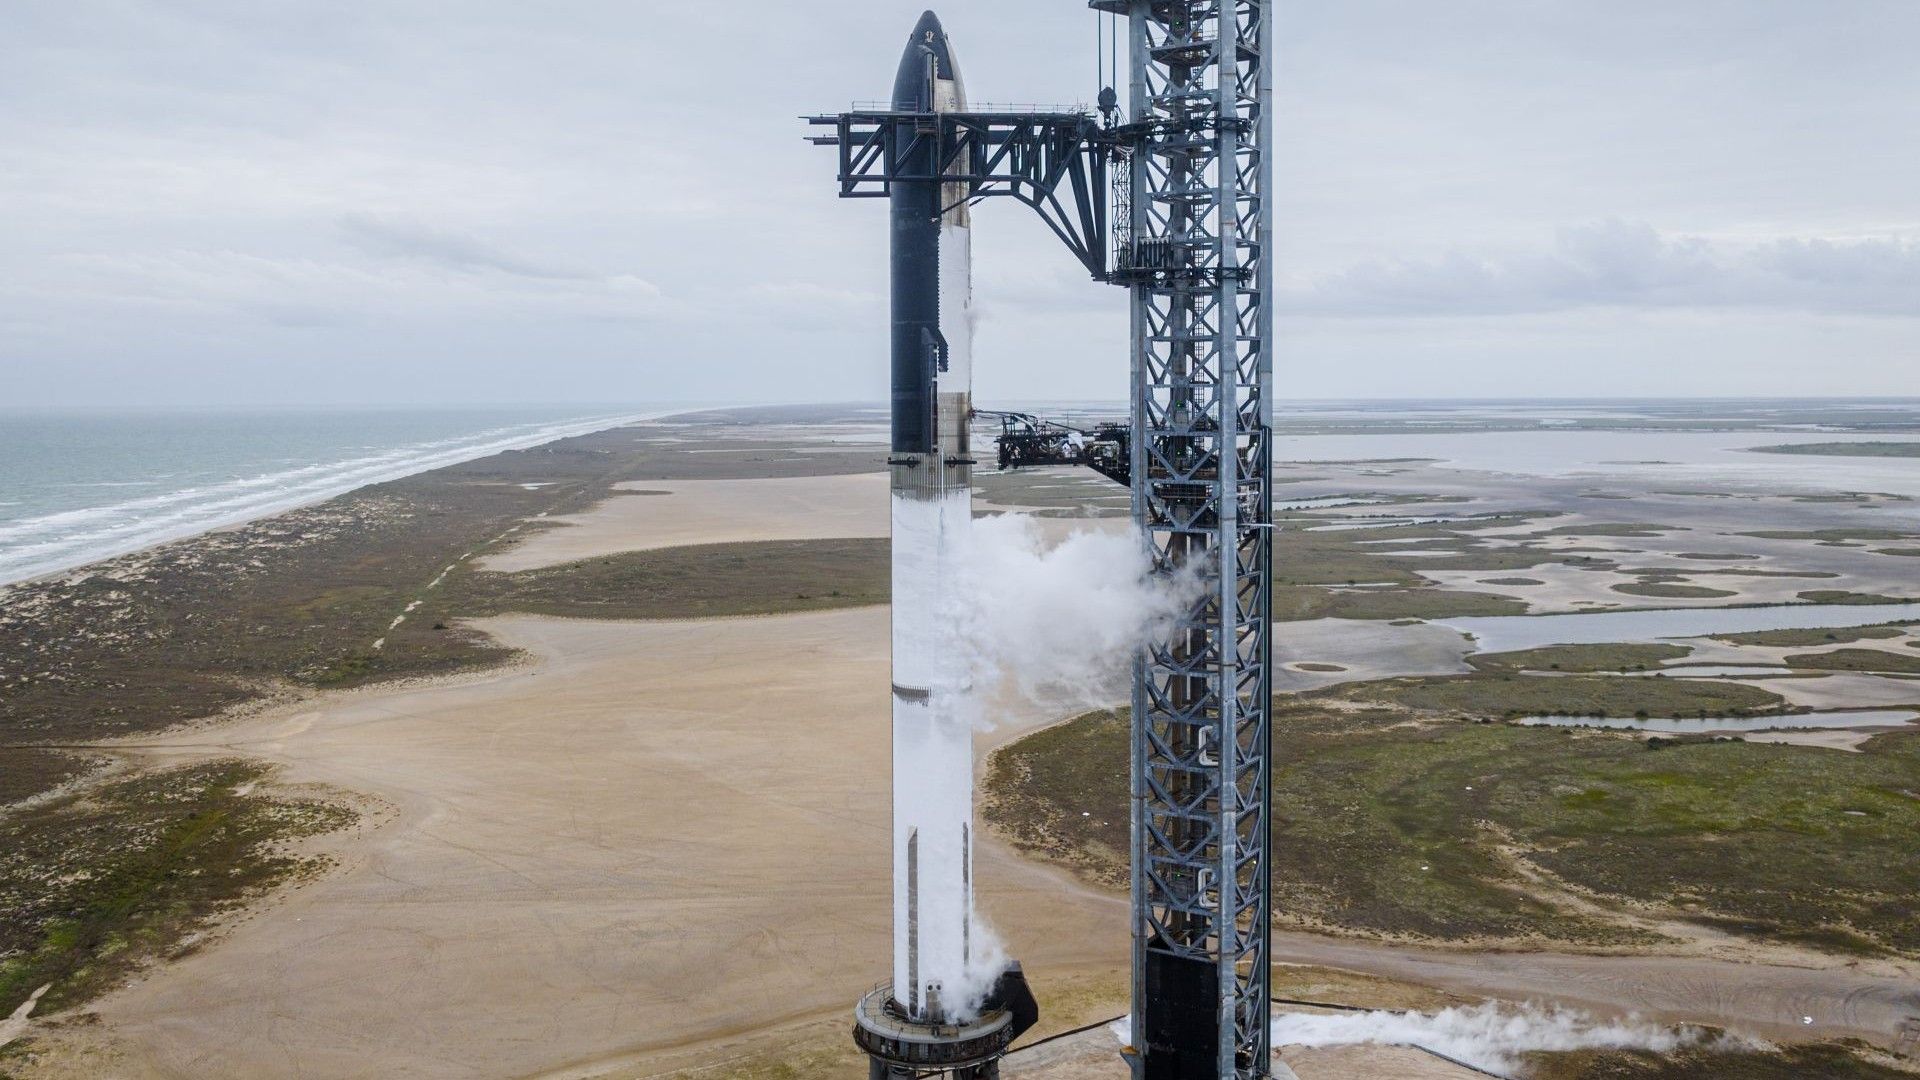 Starship has 50 chance of success on 1st orbital flight, Musk says Space